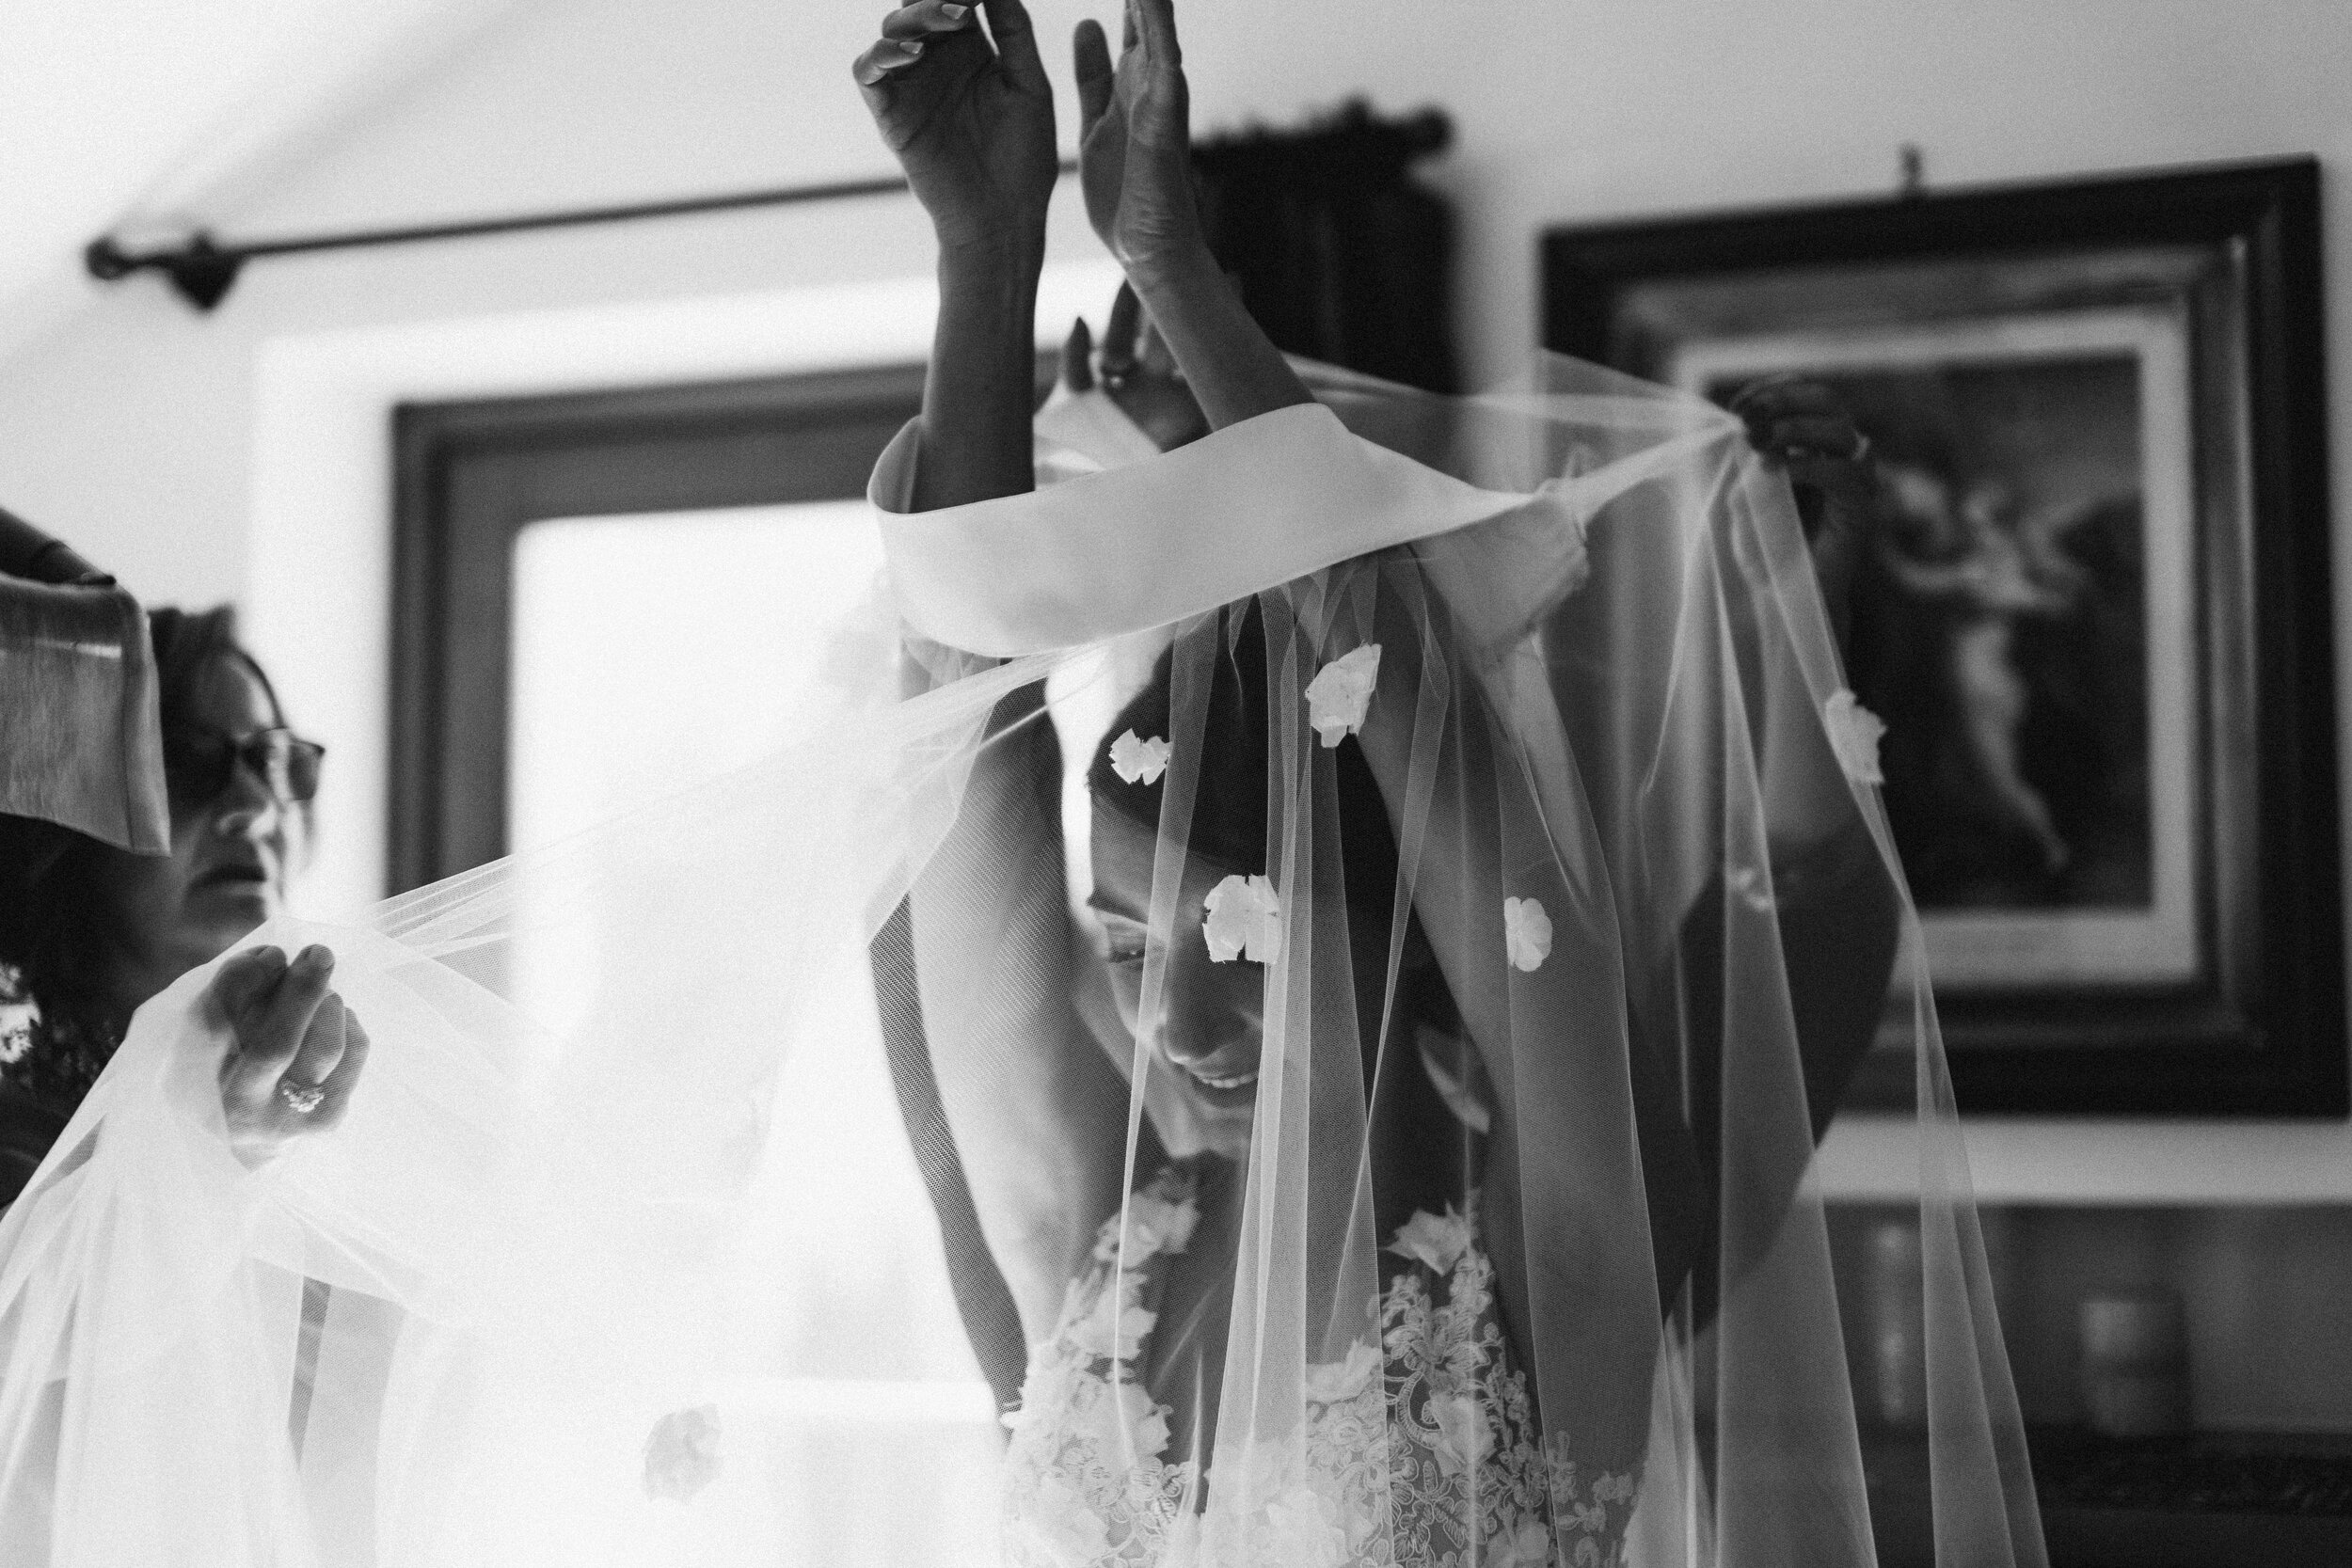 006 - Preparazione sposa - Miriam Callegari Fotografa.jpg